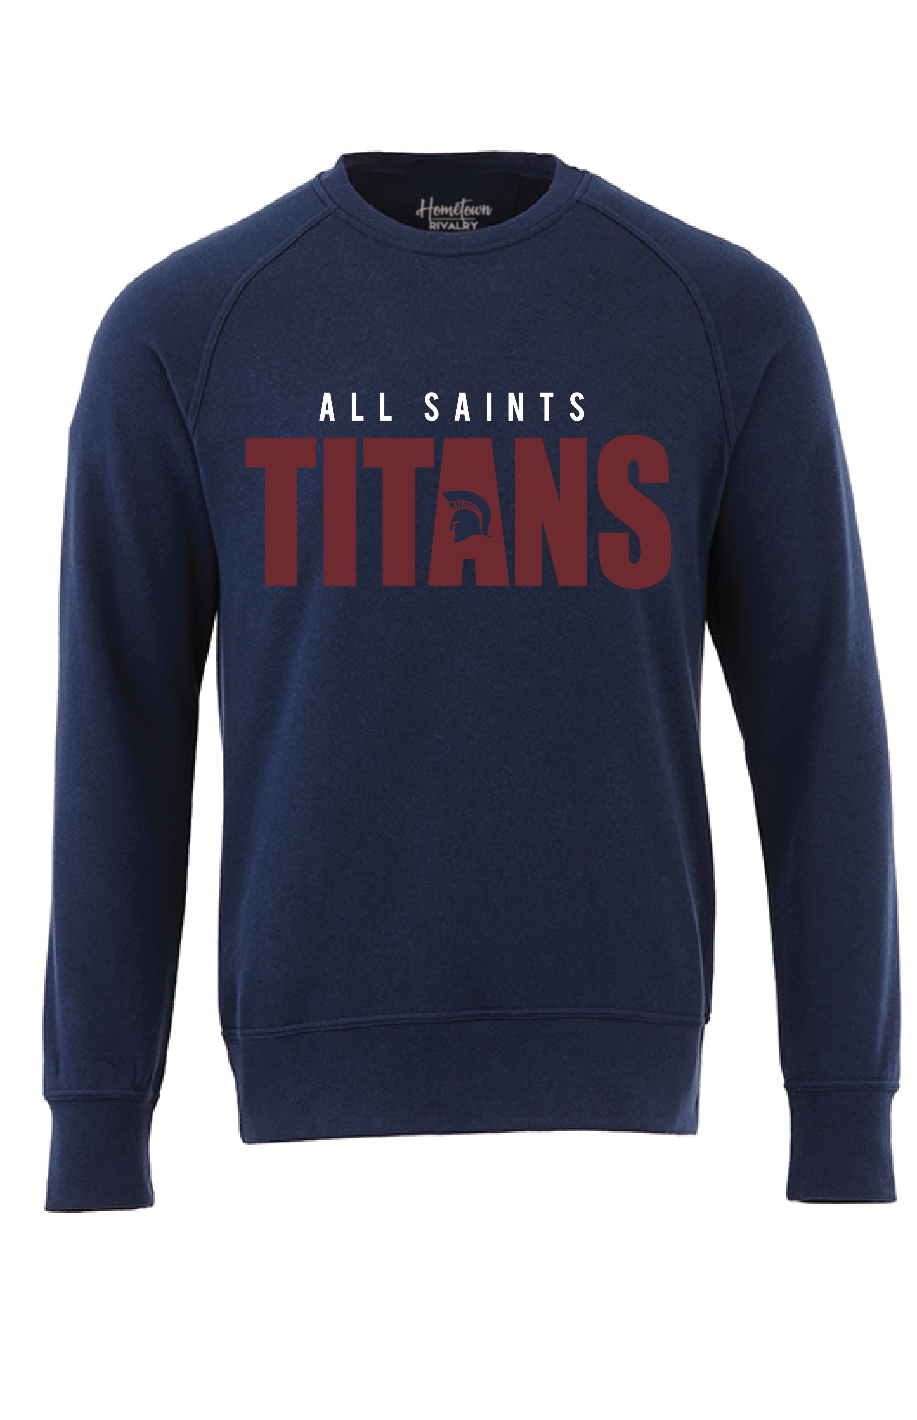 All Saints Raglan Navy Crewneck sweatshirt-Men's